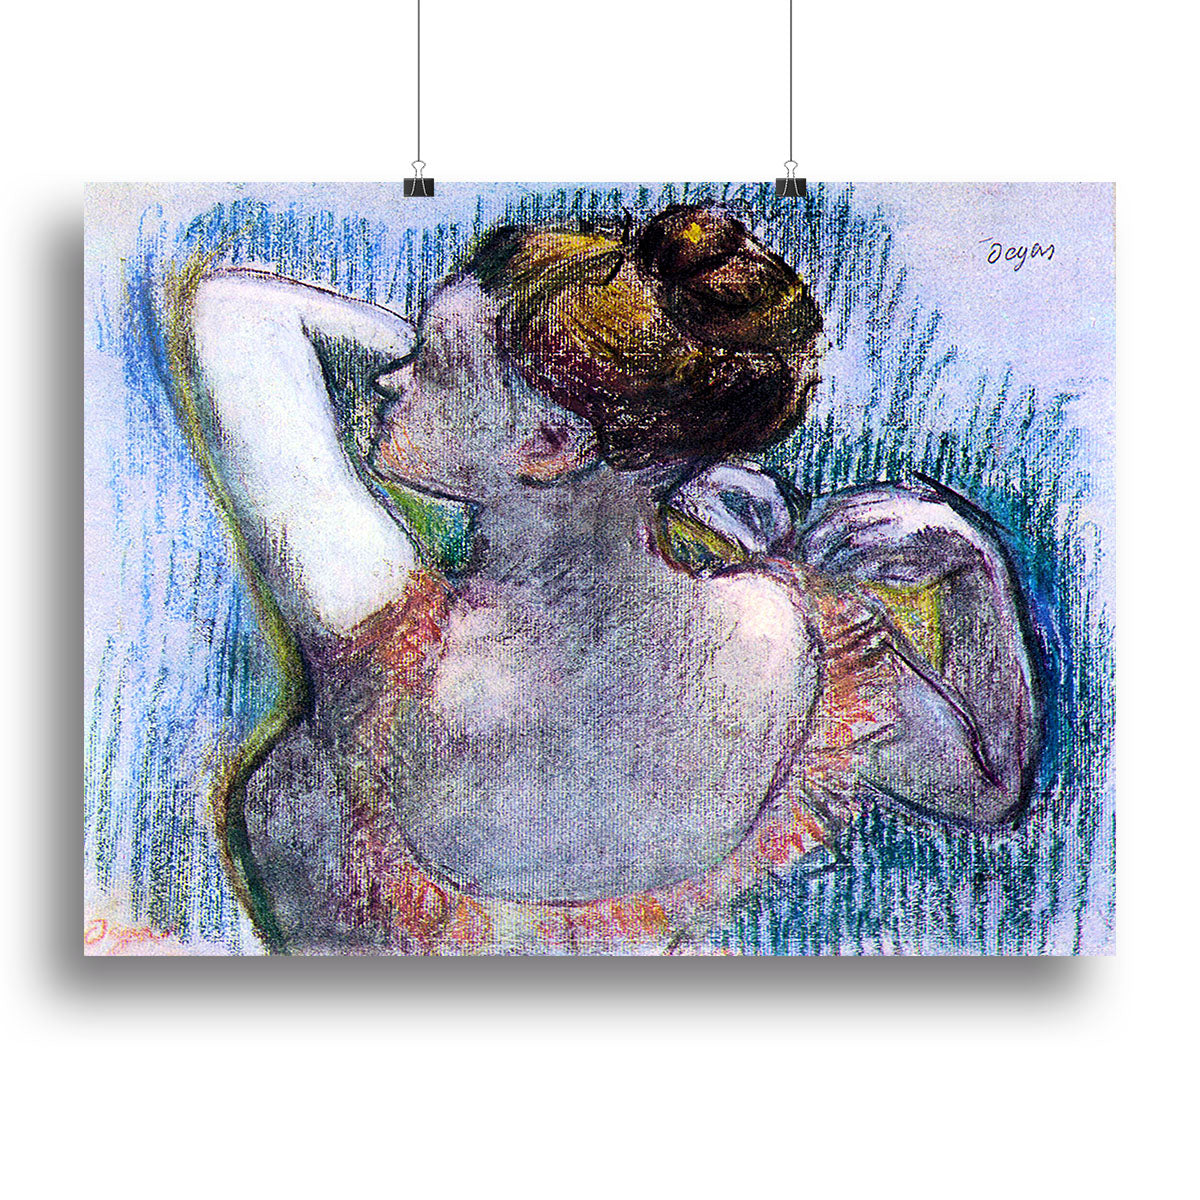 Dancer 1 by Degas Canvas Print or Poster - Canvas Art Rocks - 2